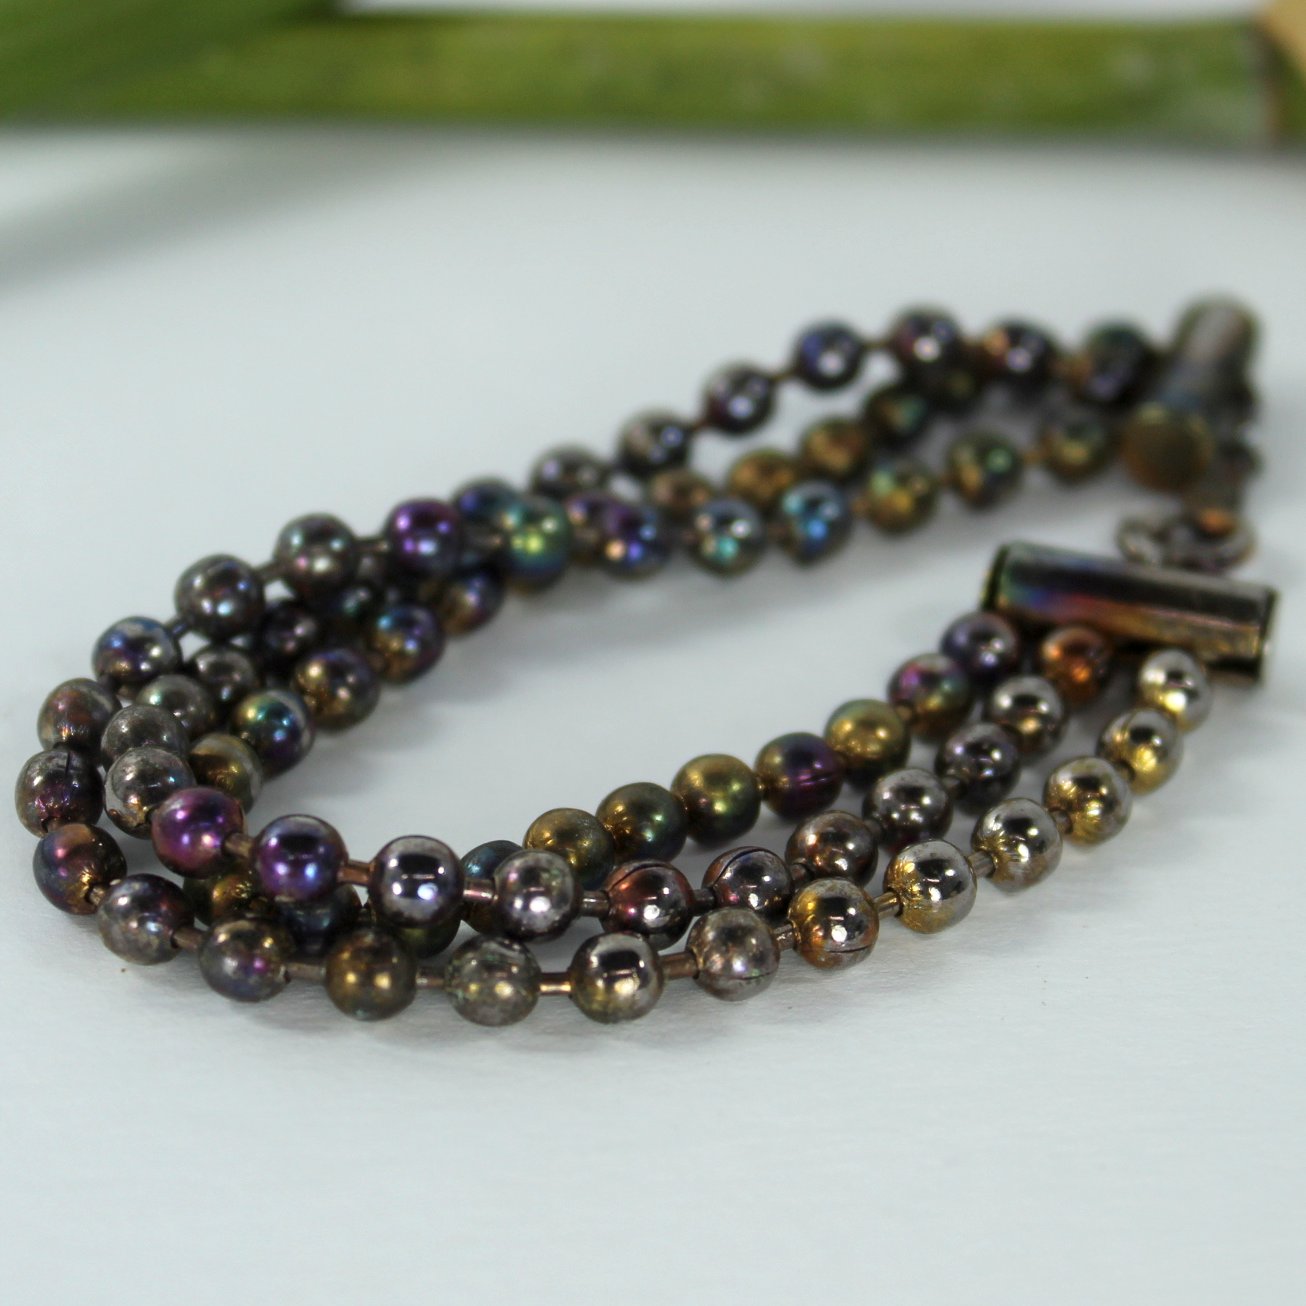 Iridescent Ball Chain Bracelet 7 1/2"  Length Metallic Colors closeup of ball beads and chain